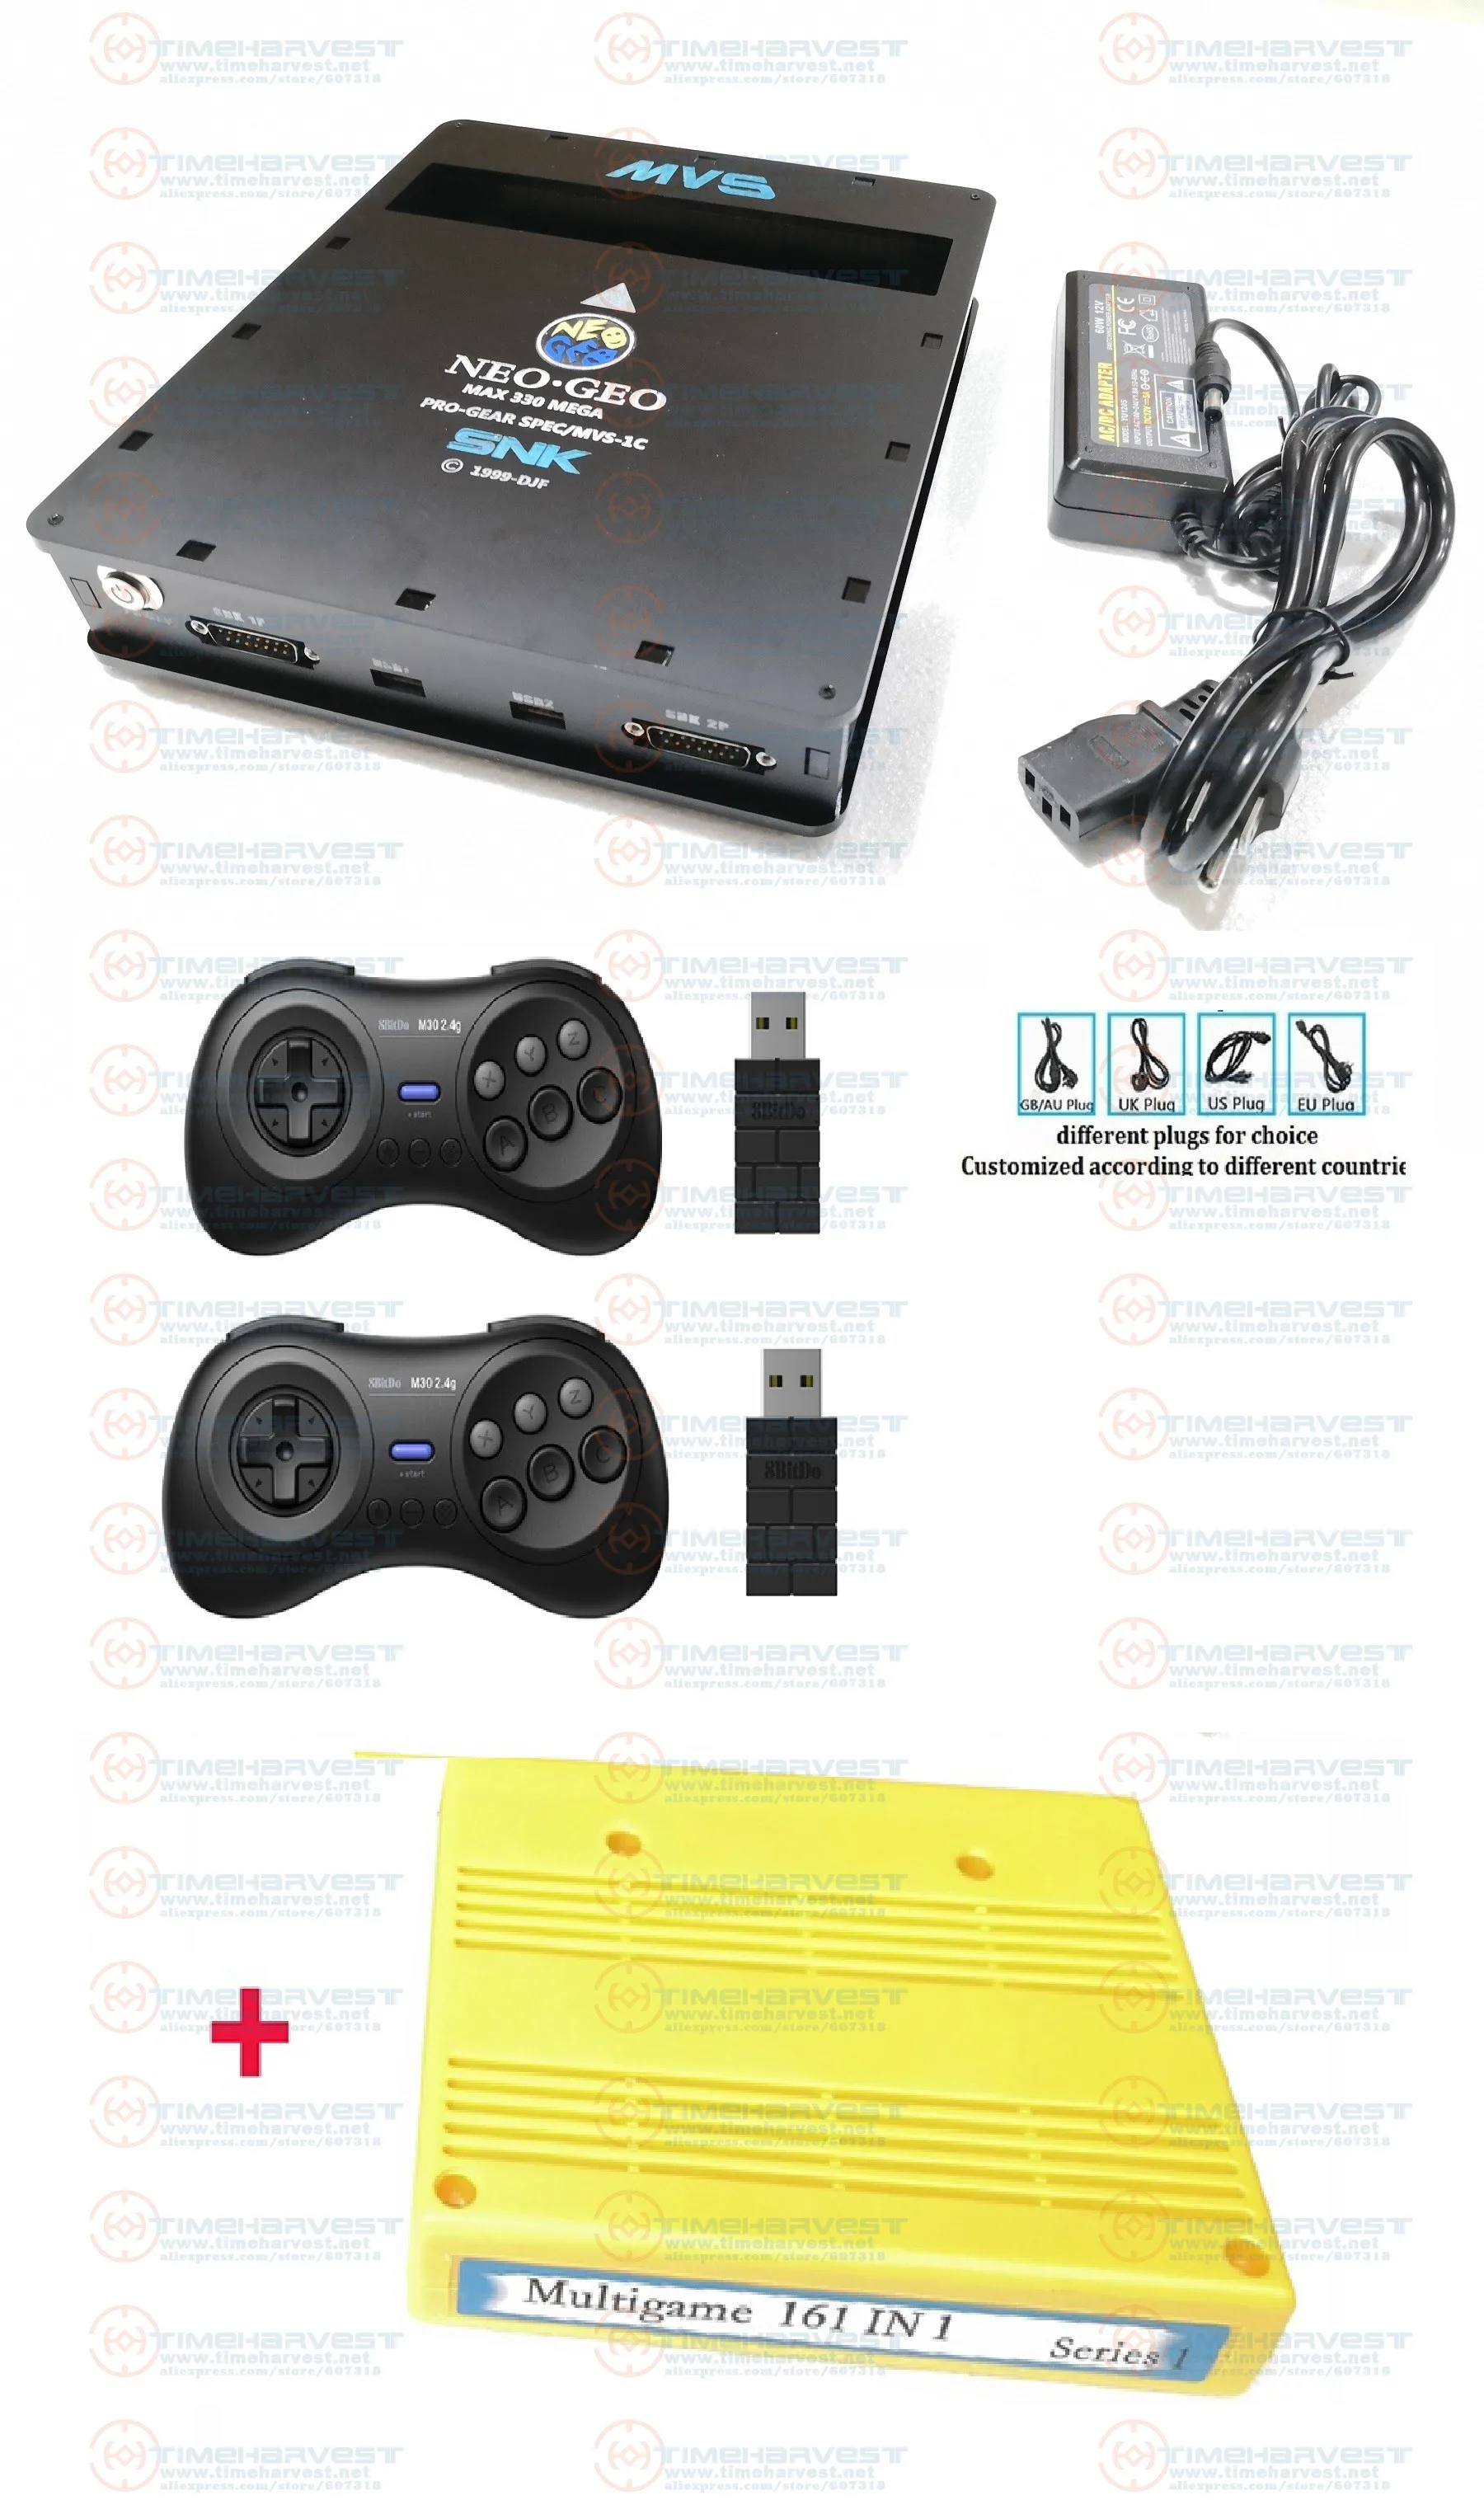 CBOX MVS console SNK NEOGEO CMVS with 2pcs 8BitDo 2.4G USBWireless joypad &amp; 161 in 1 game cartridge Arcade Family Party TV games